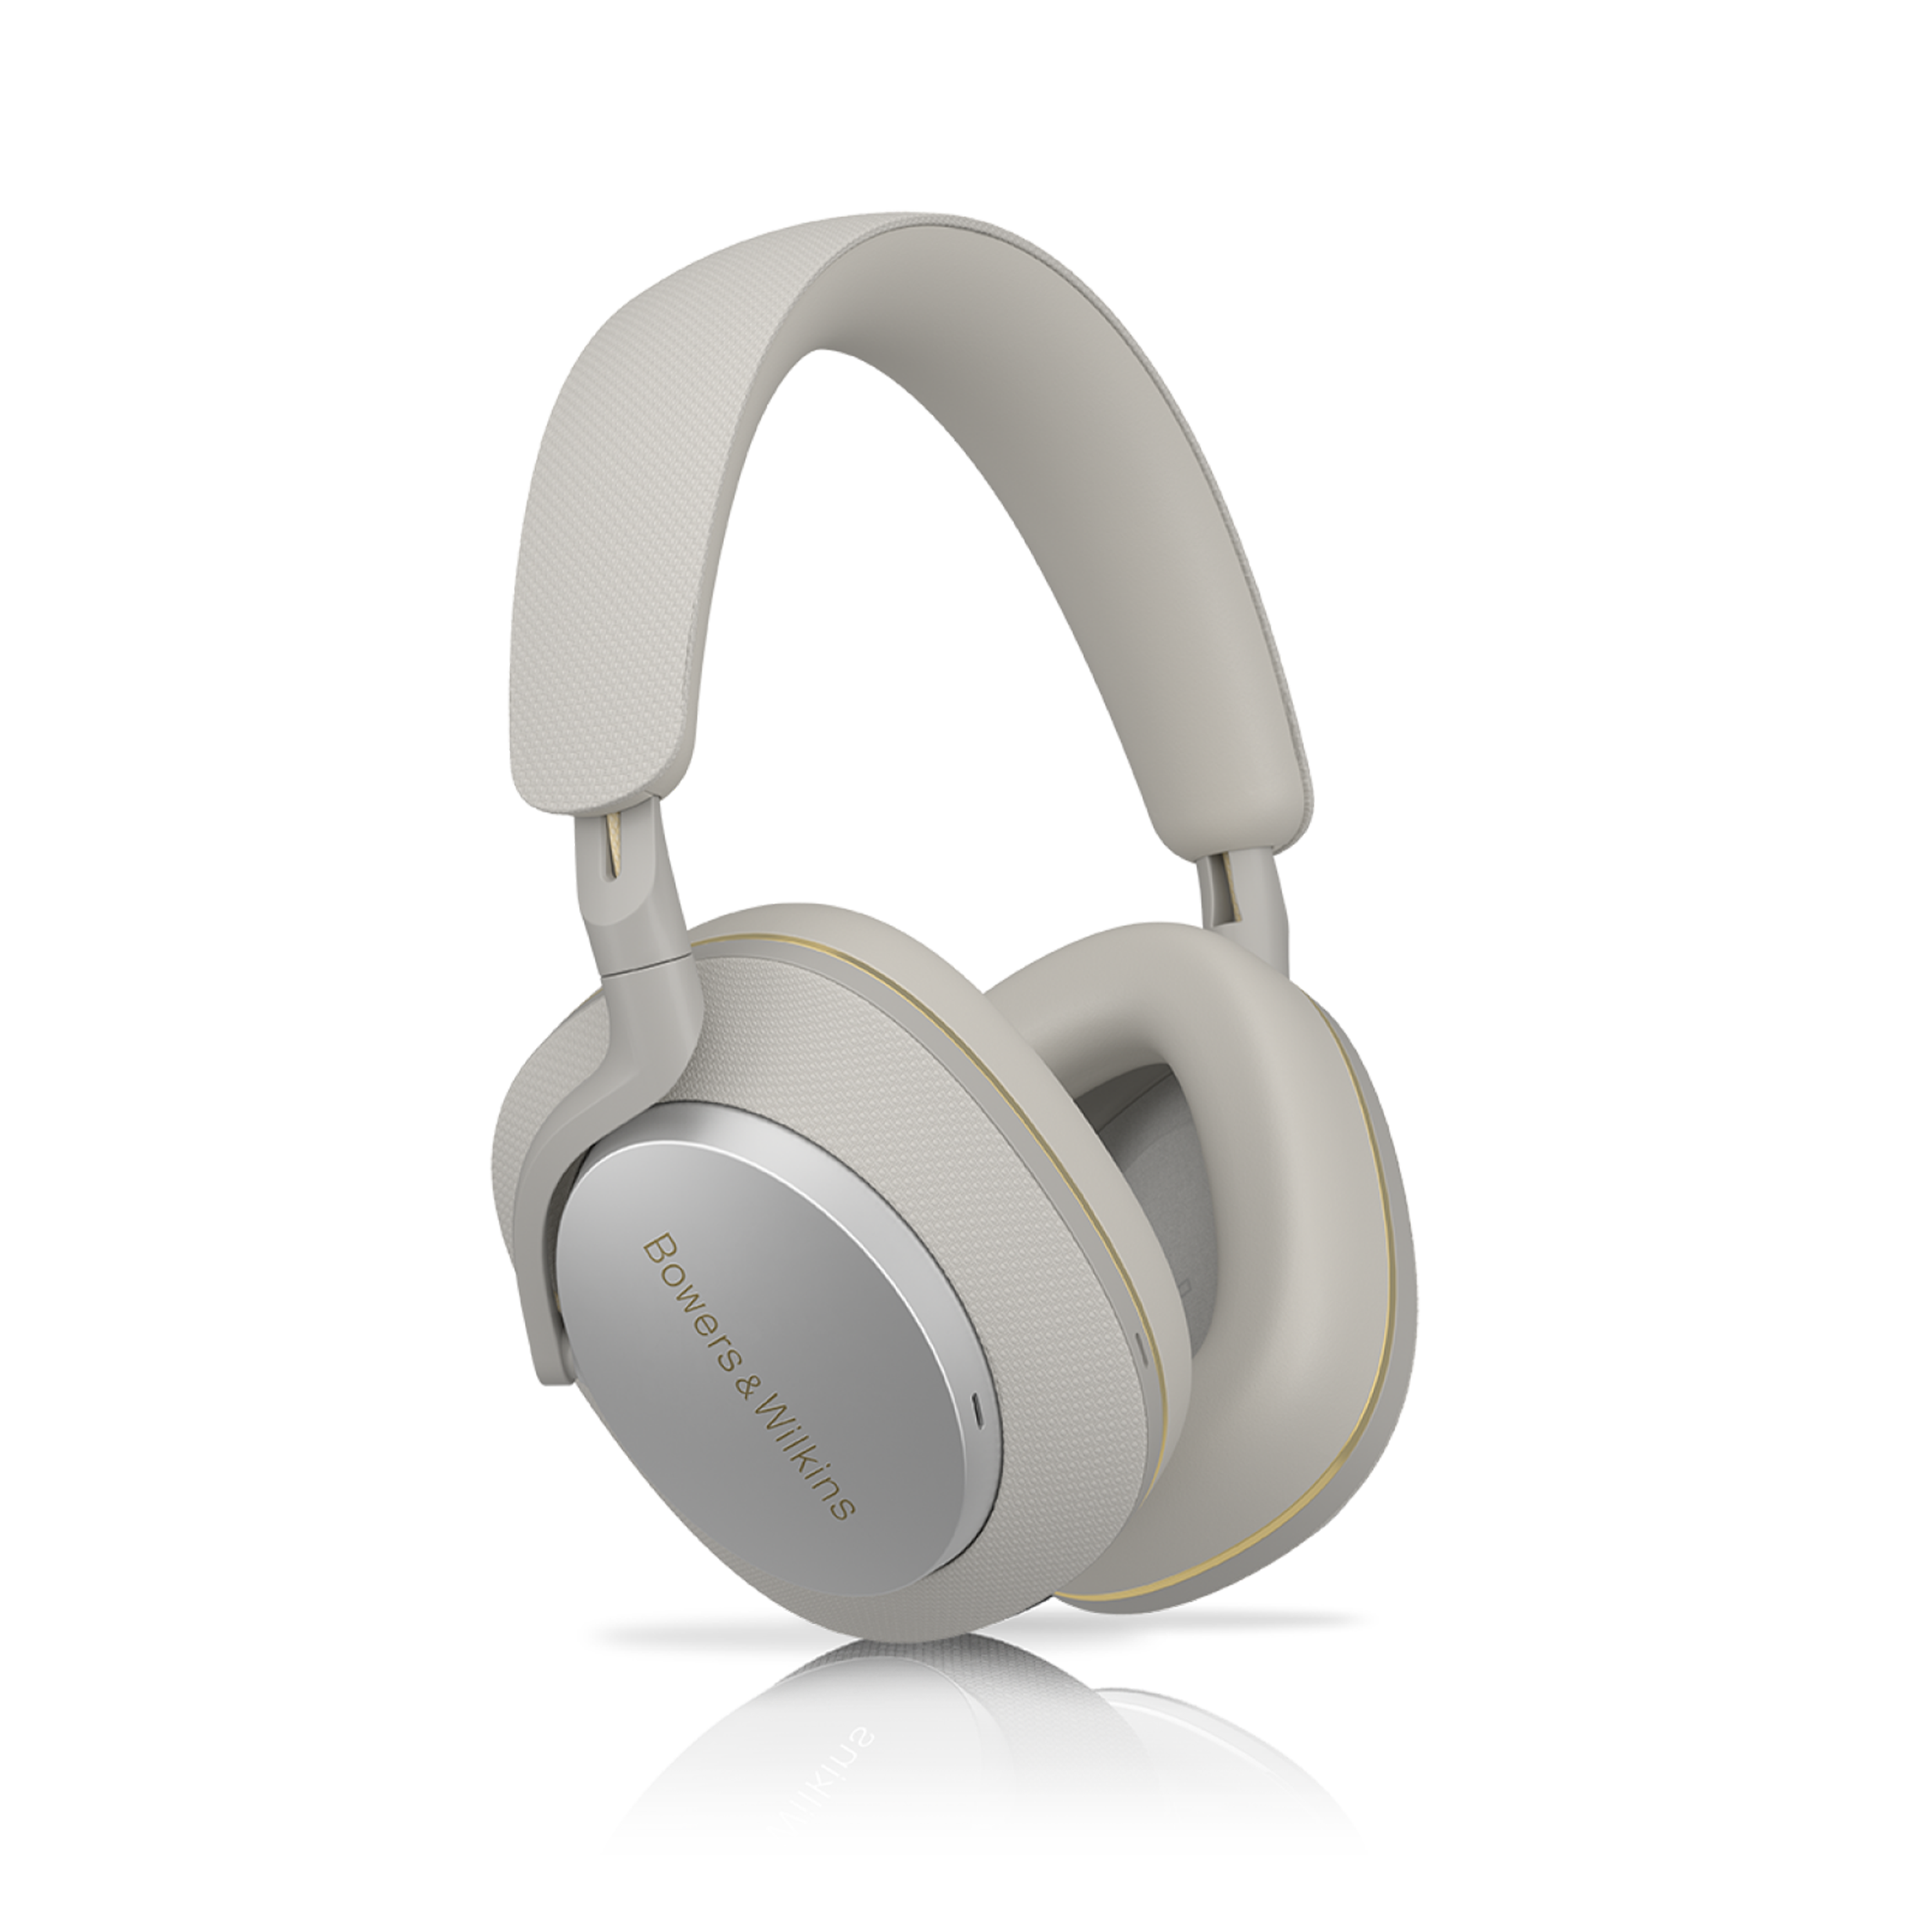 Px7 S2e - Over-Ear Headphones | Bowers & Wilkins - UK